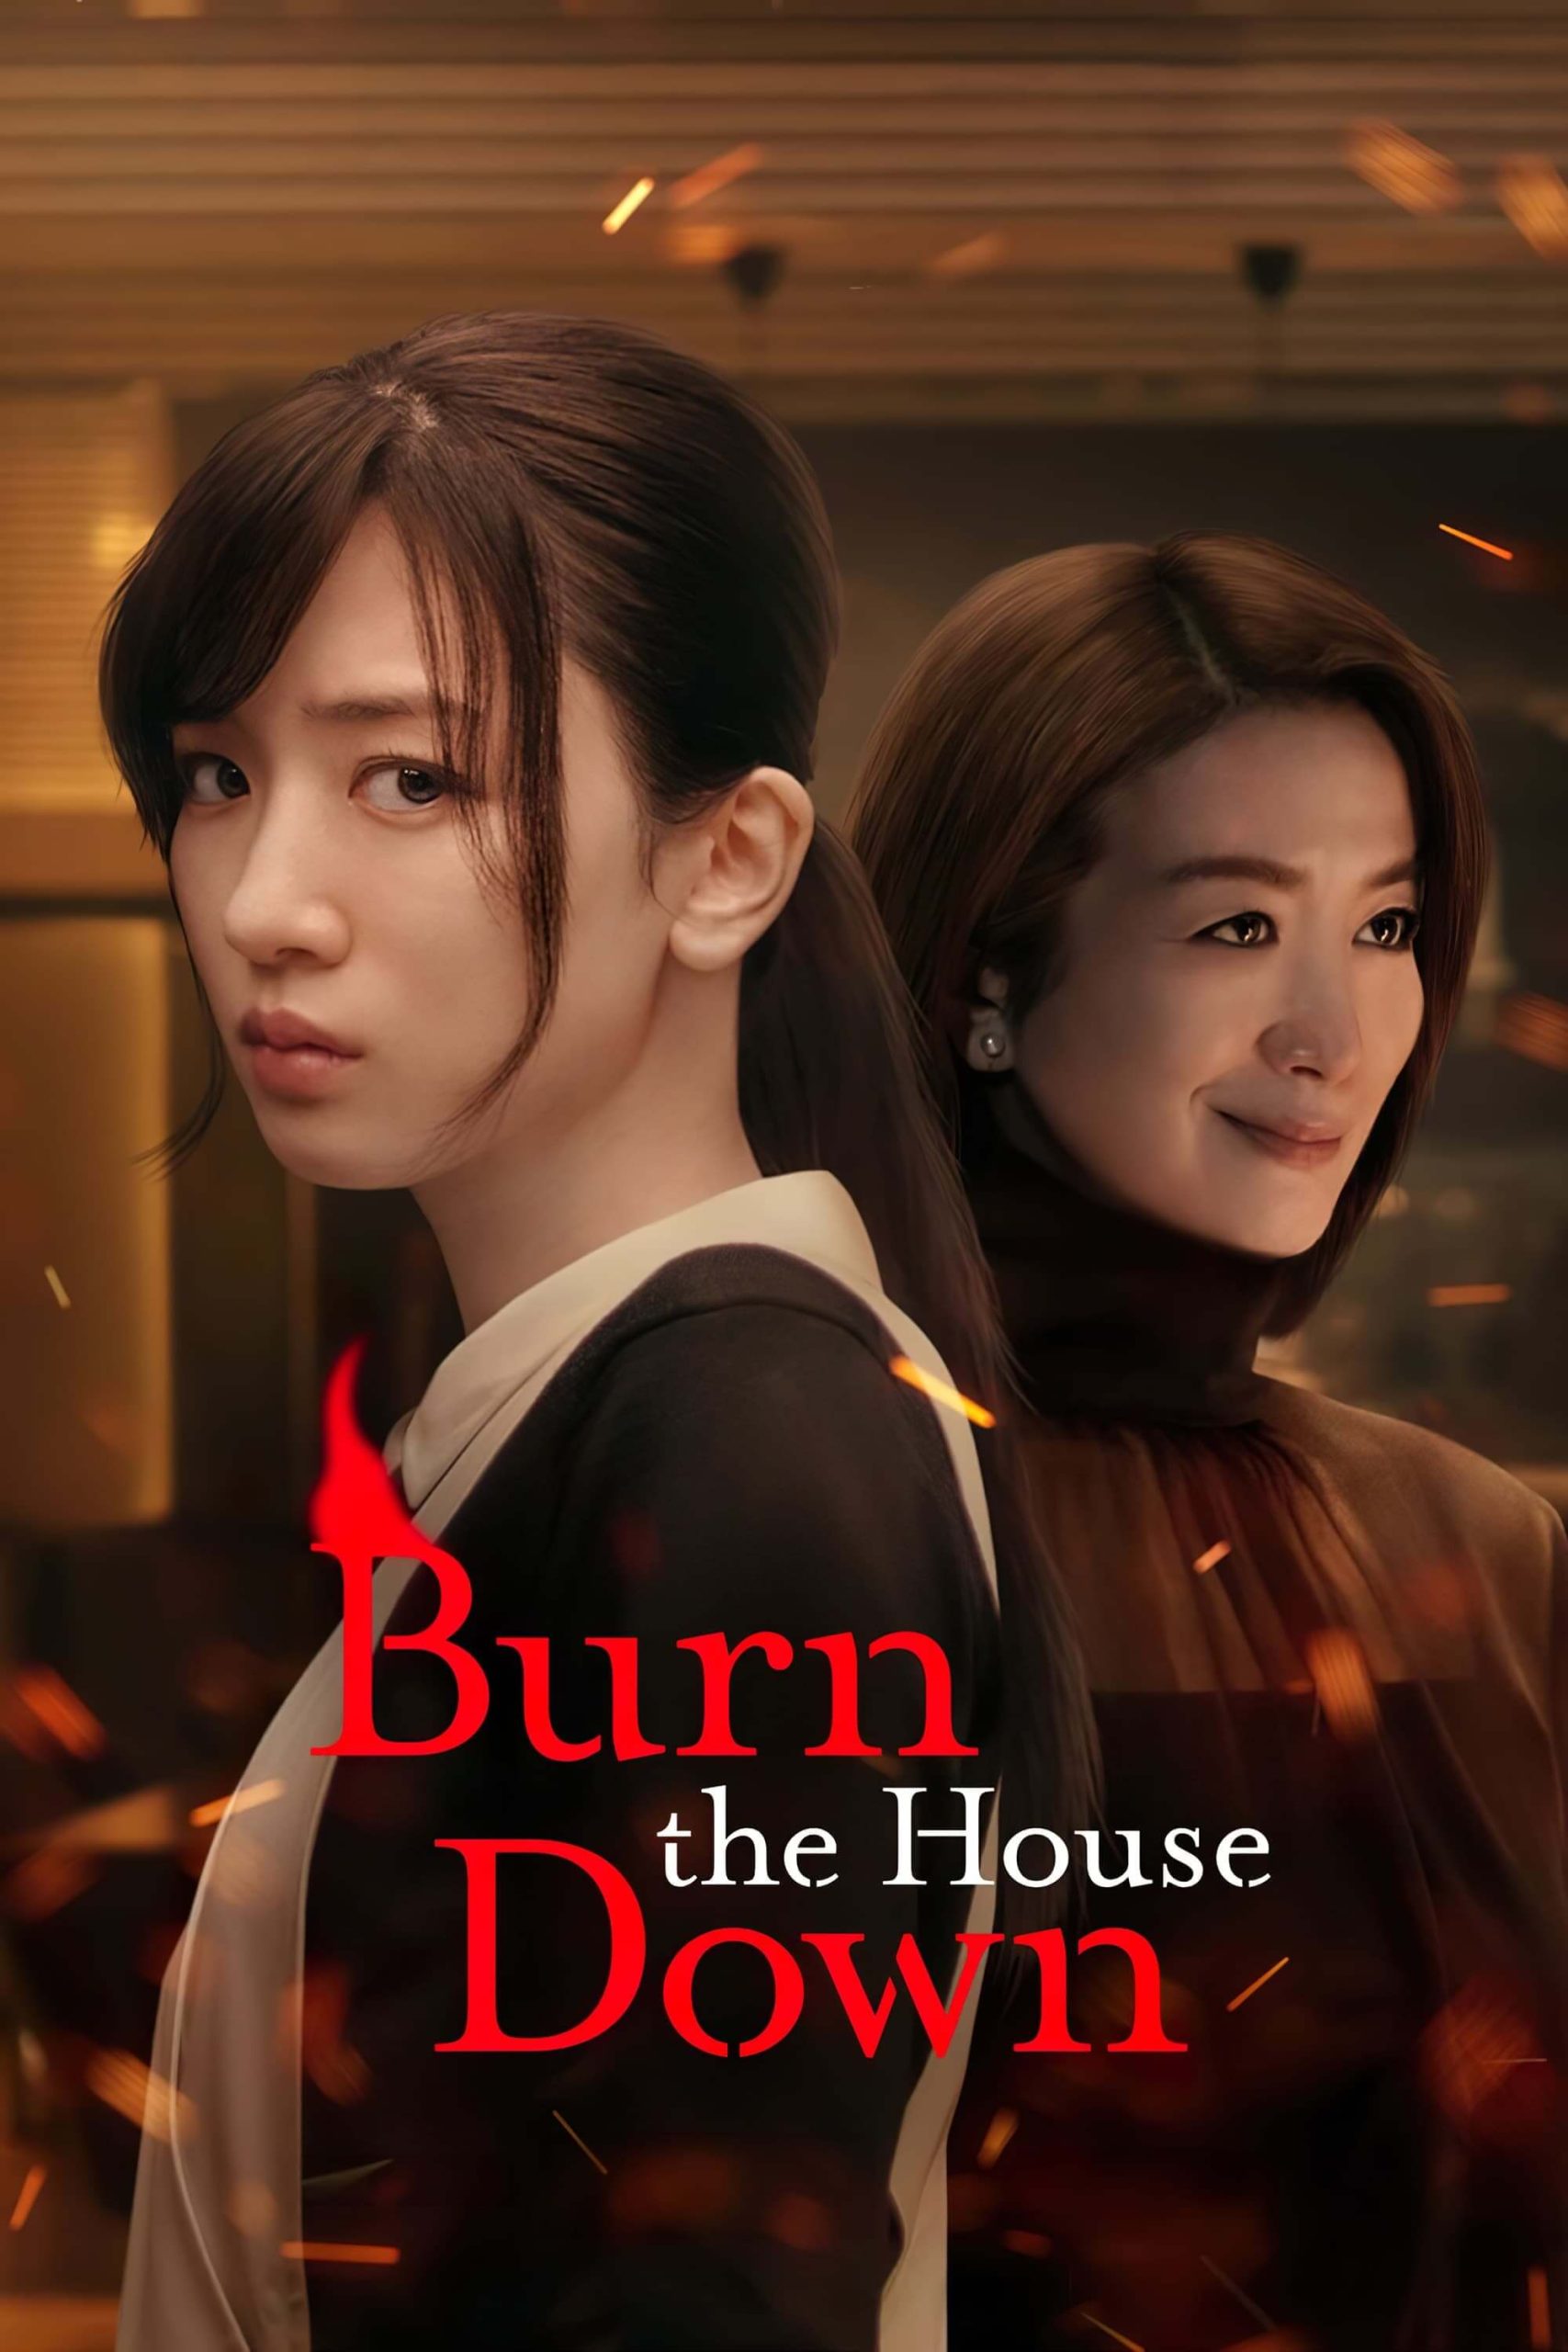 خانه را بسوزان (Burn the House Down)